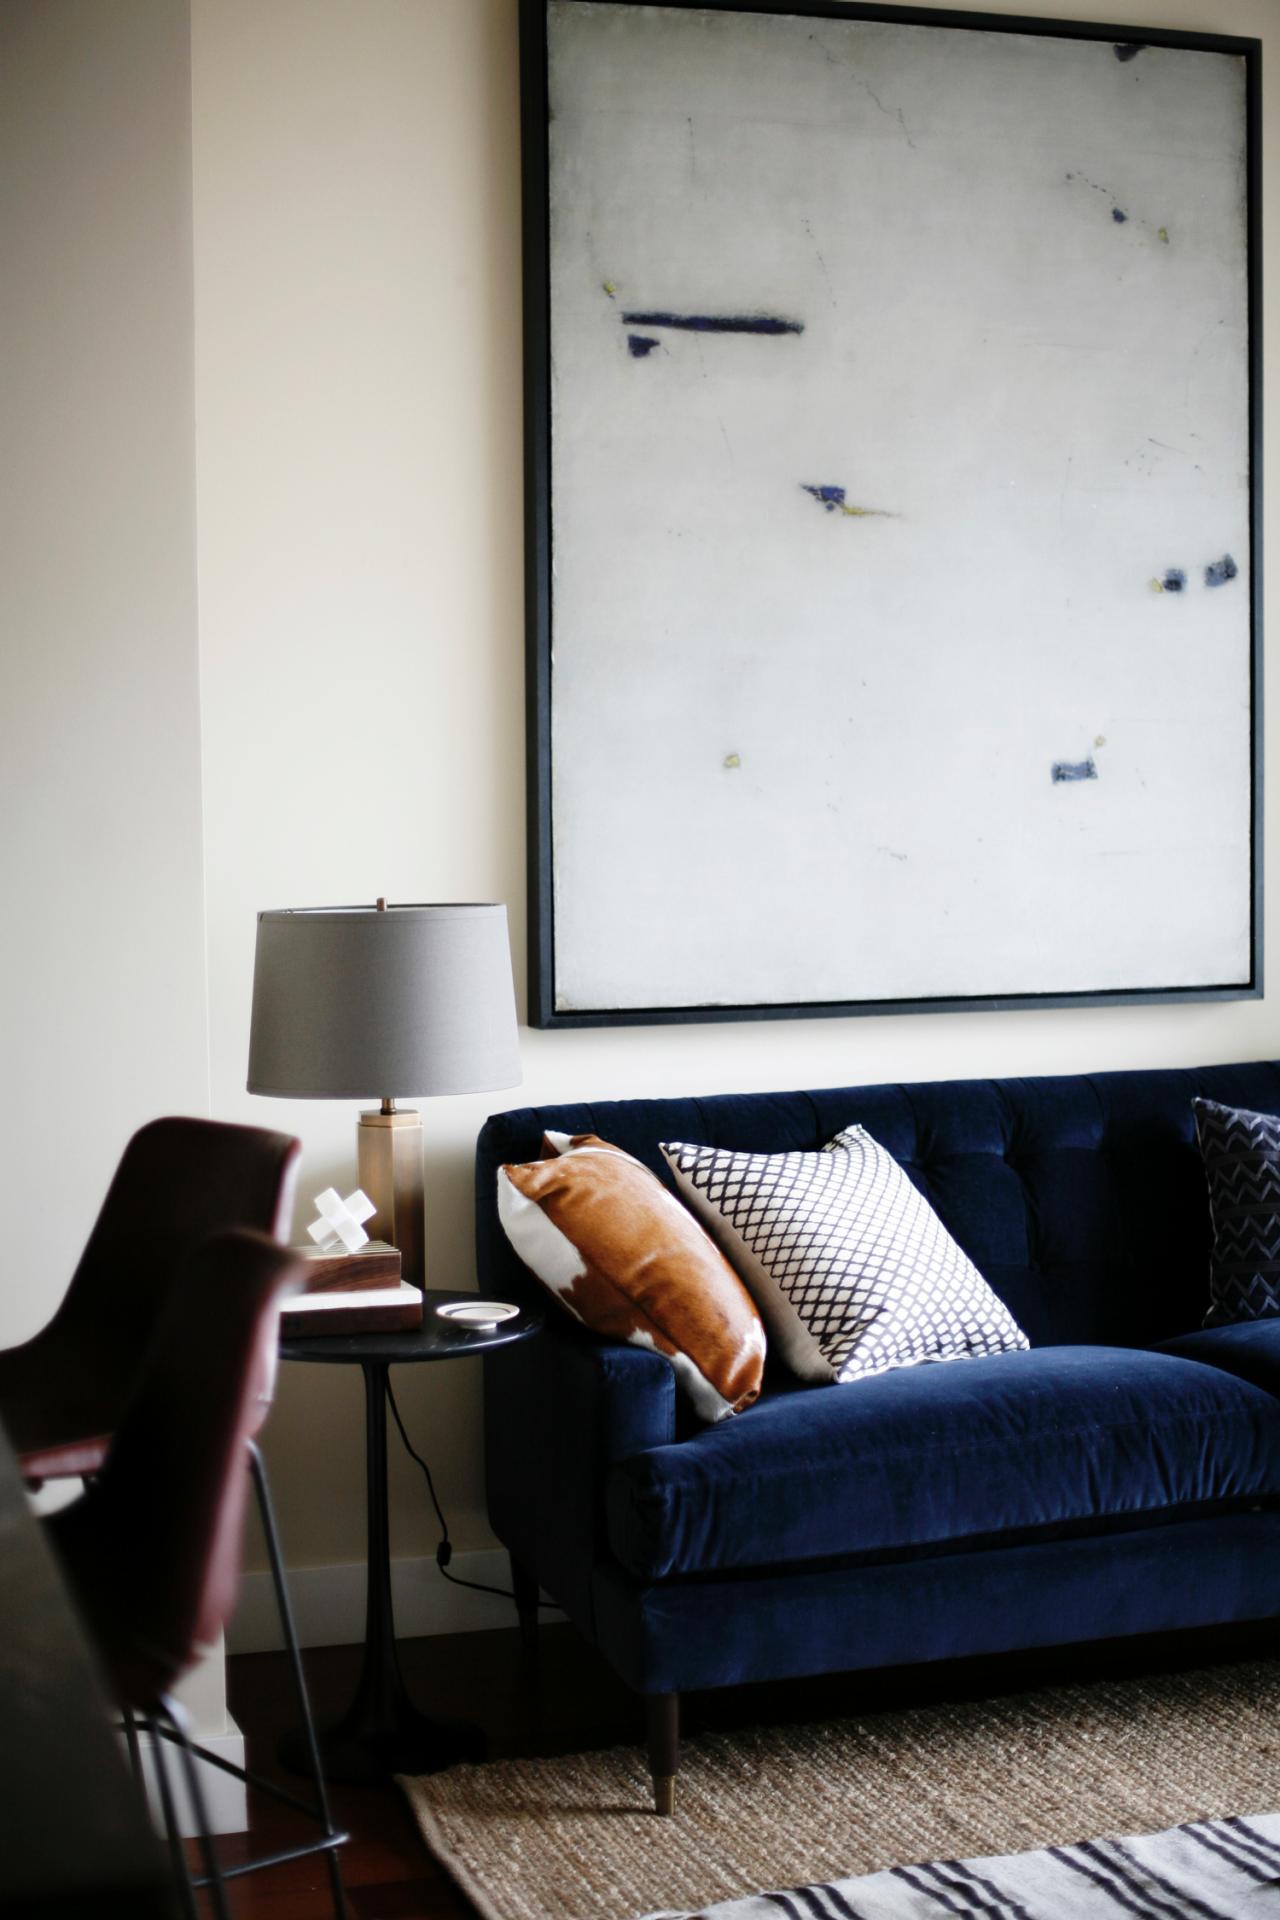 Cool Down Your Design With Blue Velvet Furniture Hgtv S Decorating Design Blog Hgtv